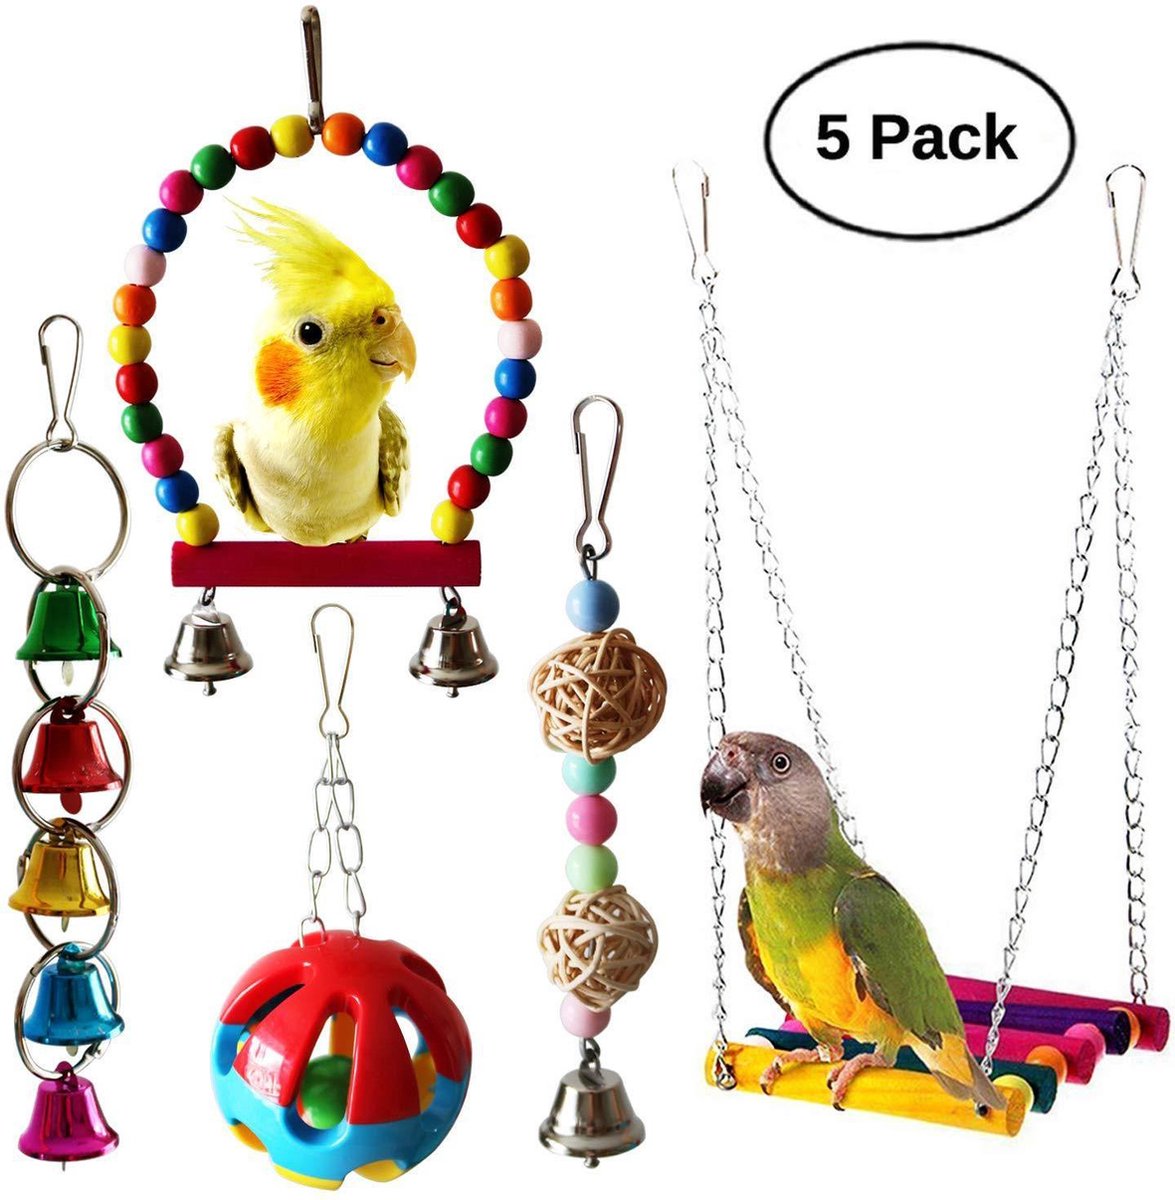 Vogelkooi Vogel Speelgoed Set stuks - Vogelschommel - Ladder - Bal m kamer5